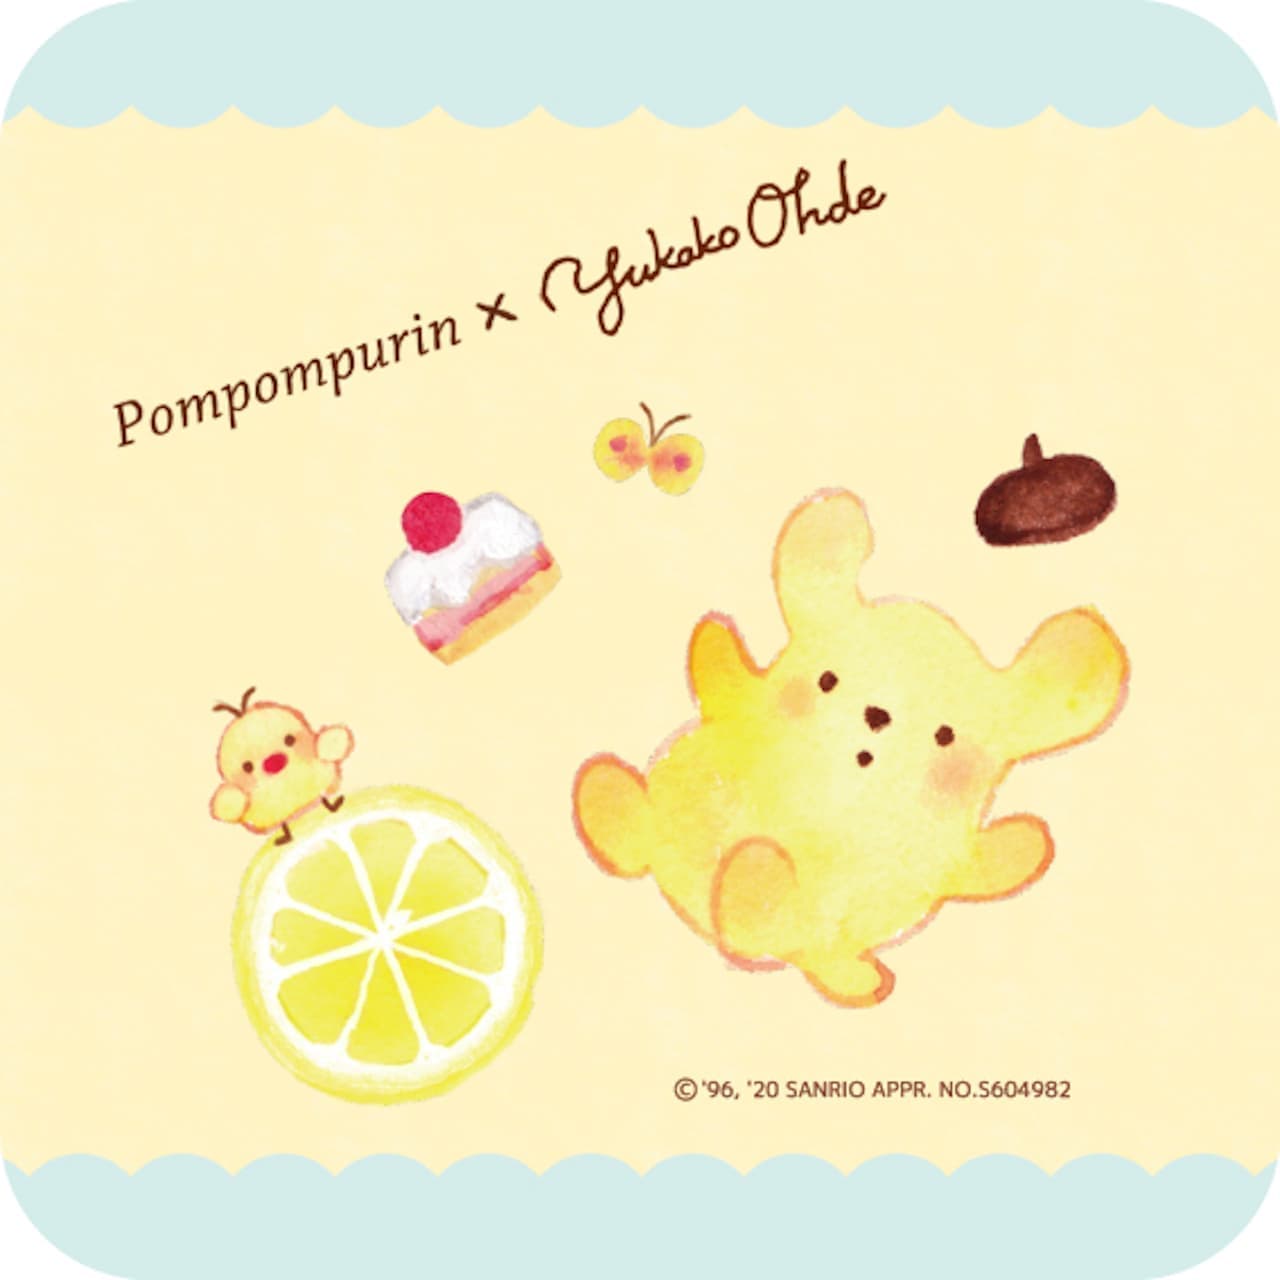 Birthday menu of Pompompurin Cafe